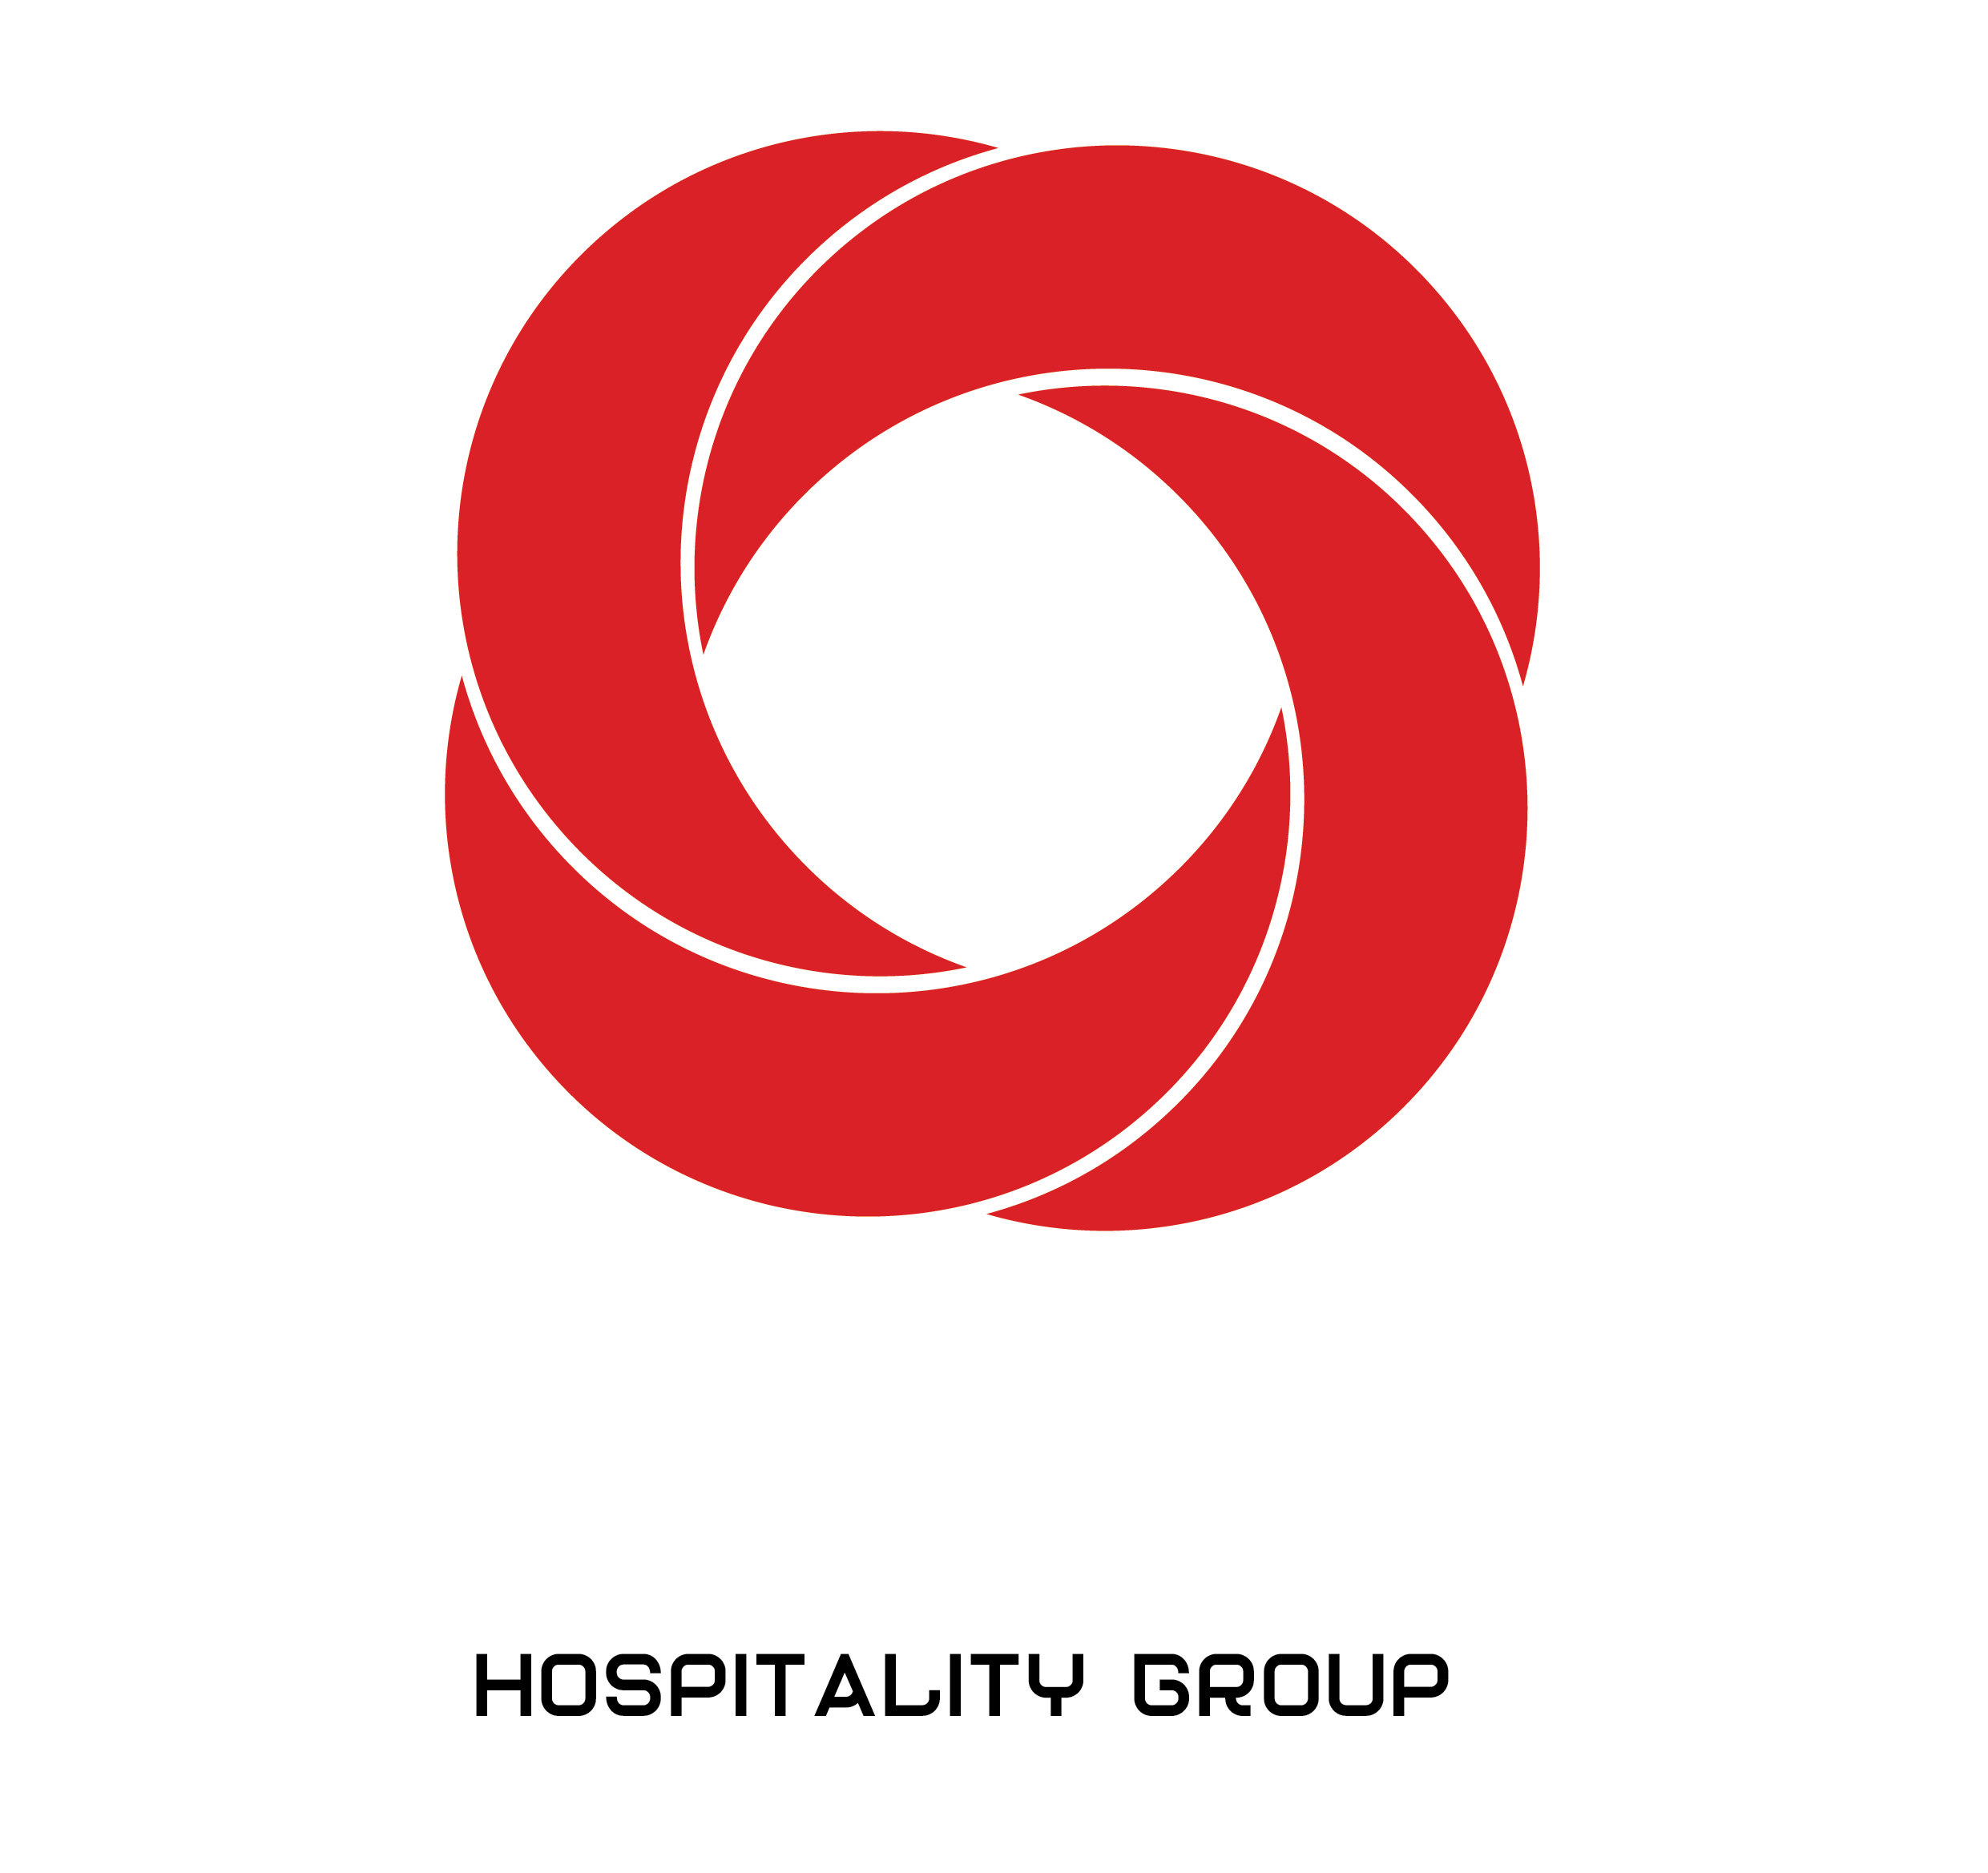 Mandala Hospitality Logo_invert